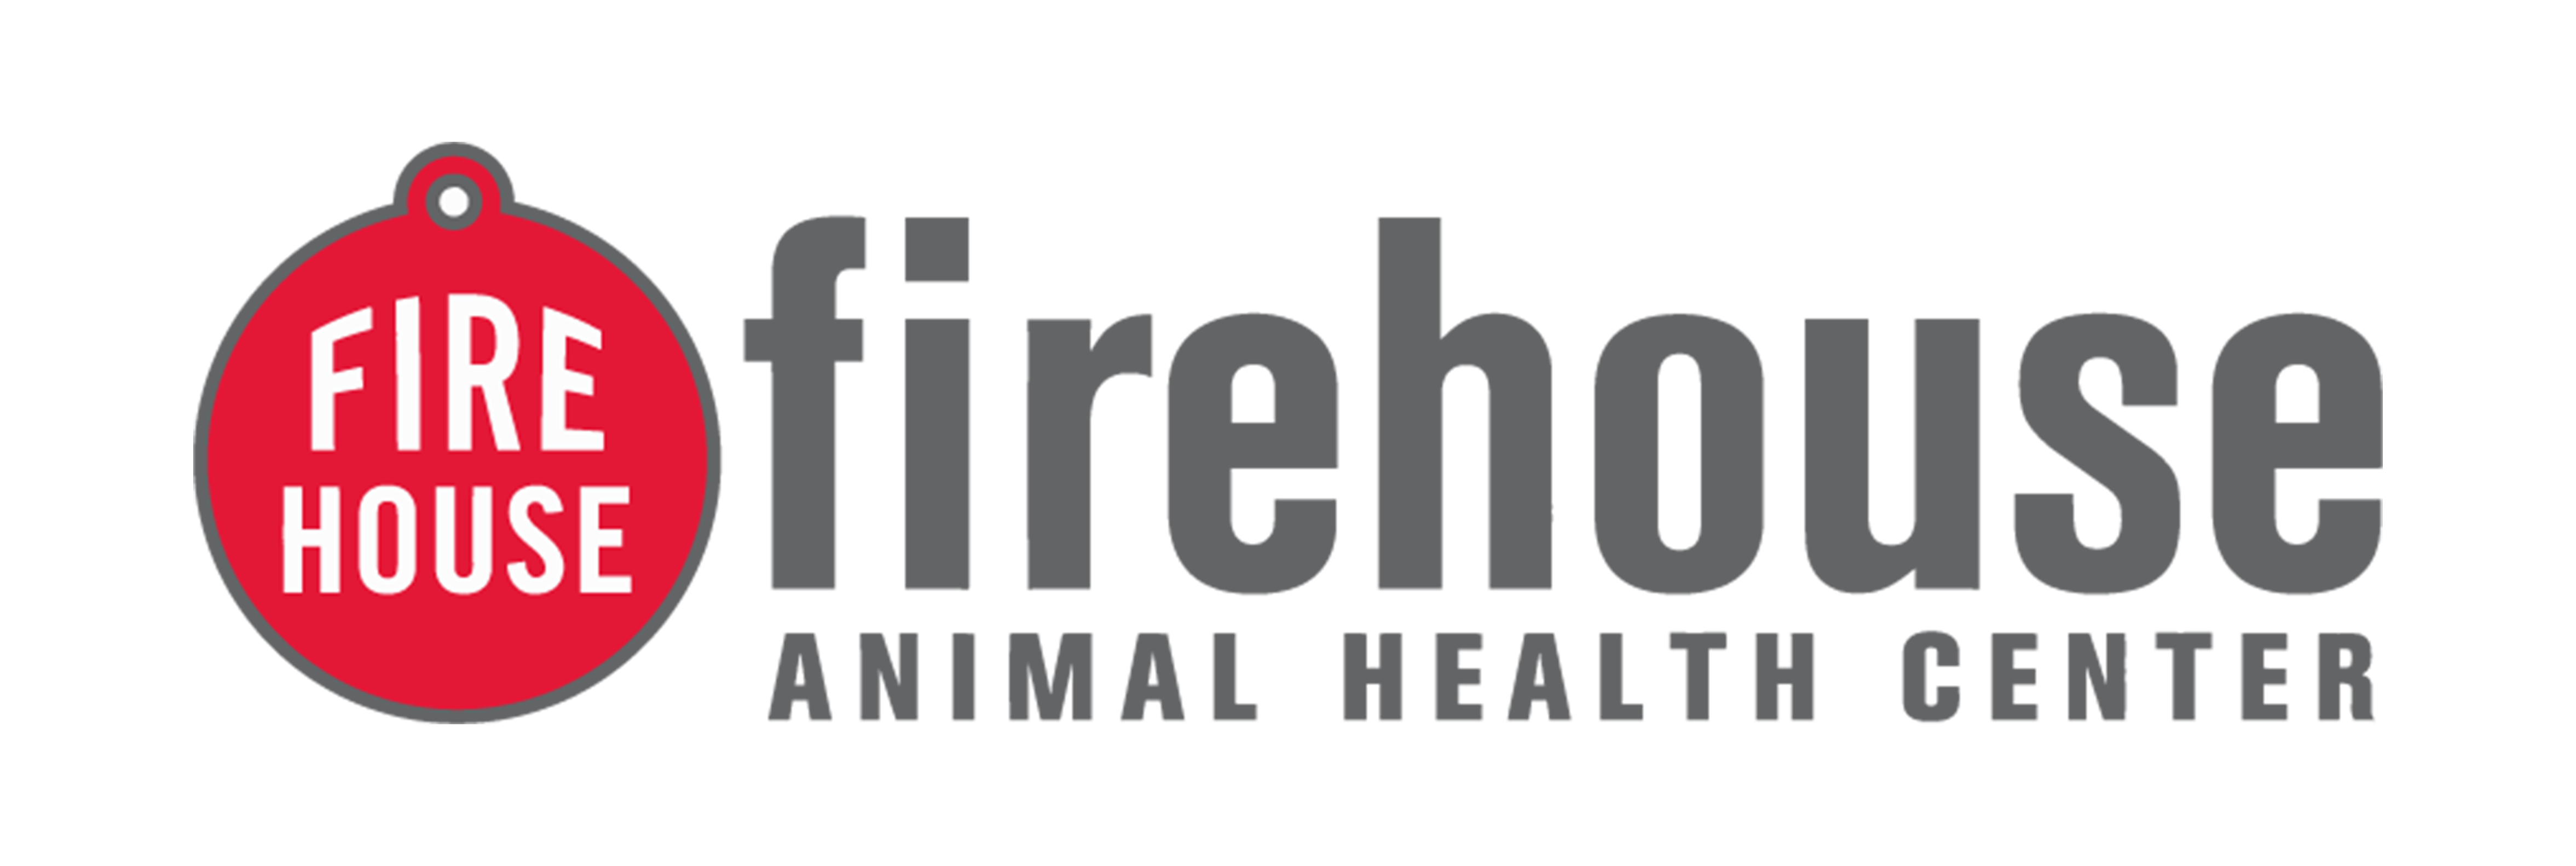 Firehouse Round Rock Logo